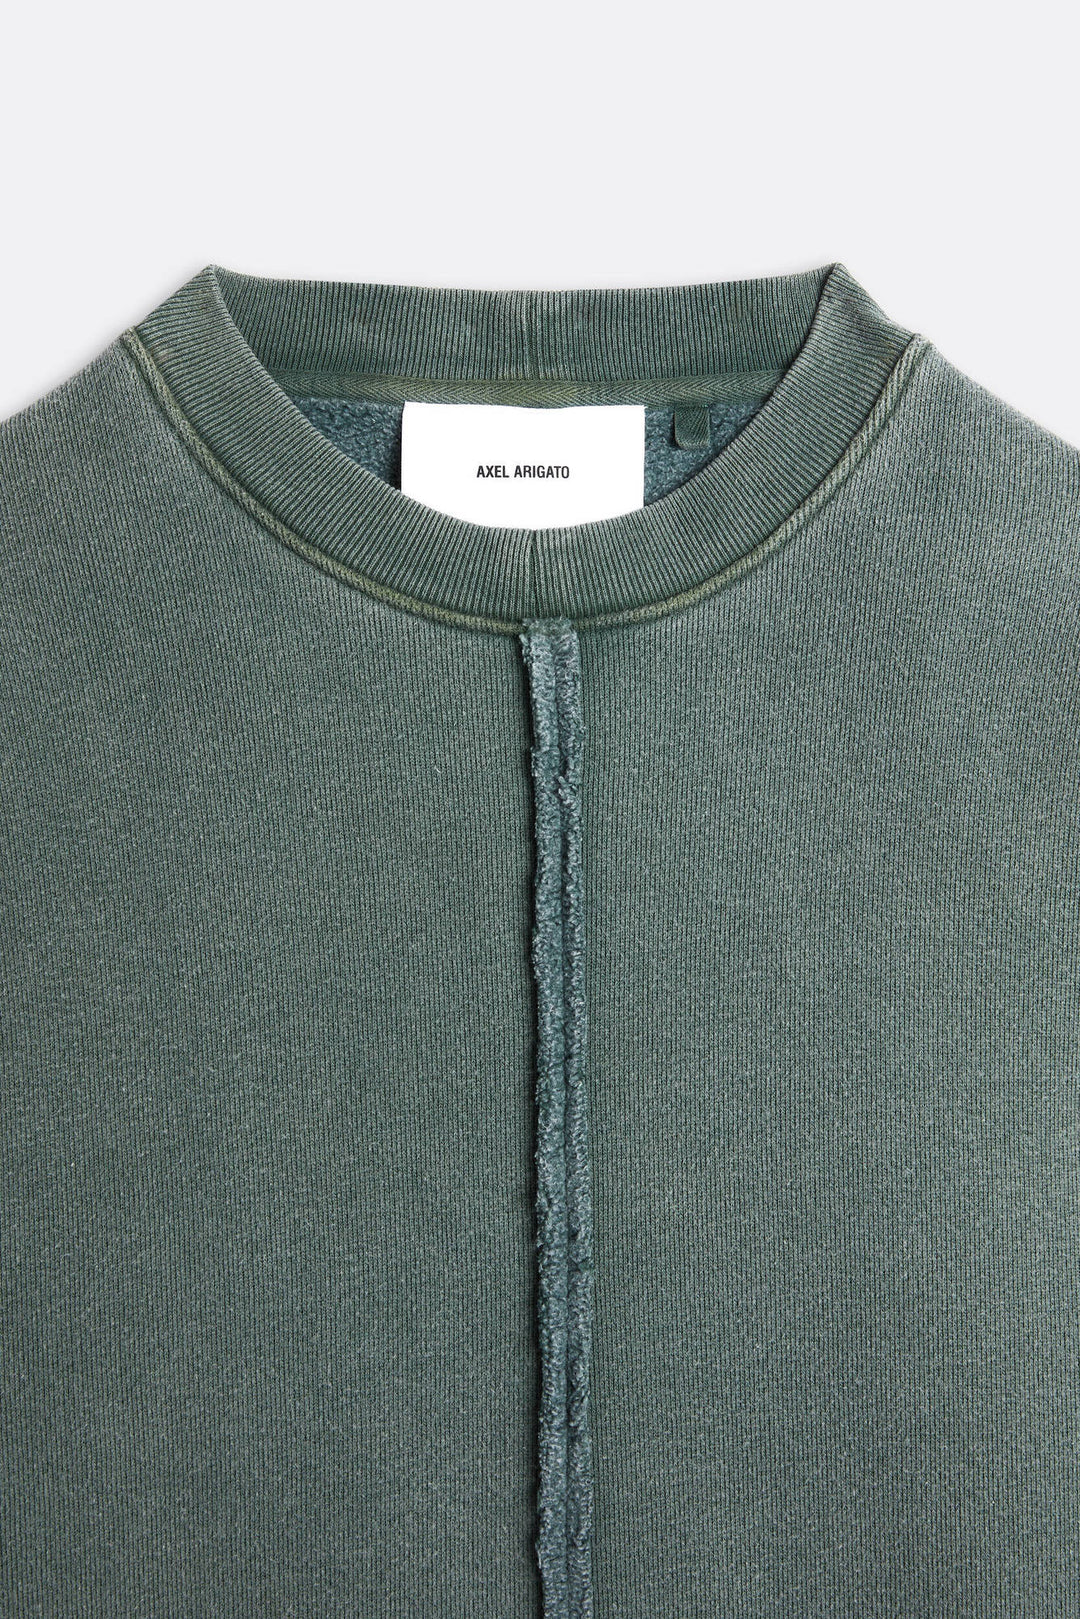 AXEL ARIGATO - Chopped Oversized Sweatshirt - Dale